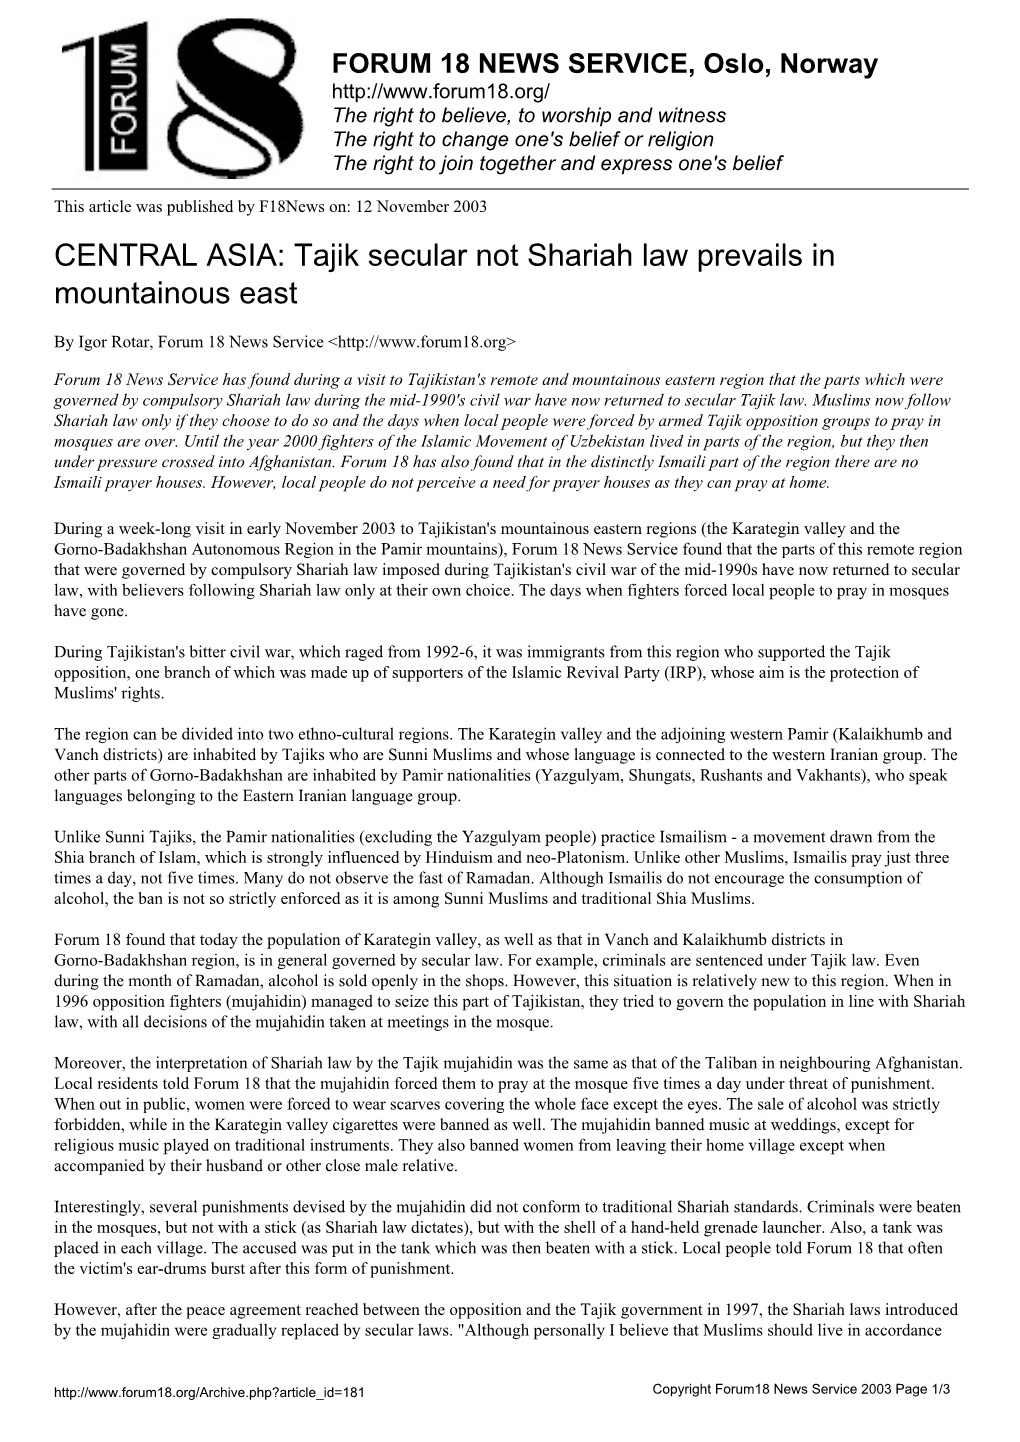 Tajik Secular Not Shariah Law Prevails in Mountainous East